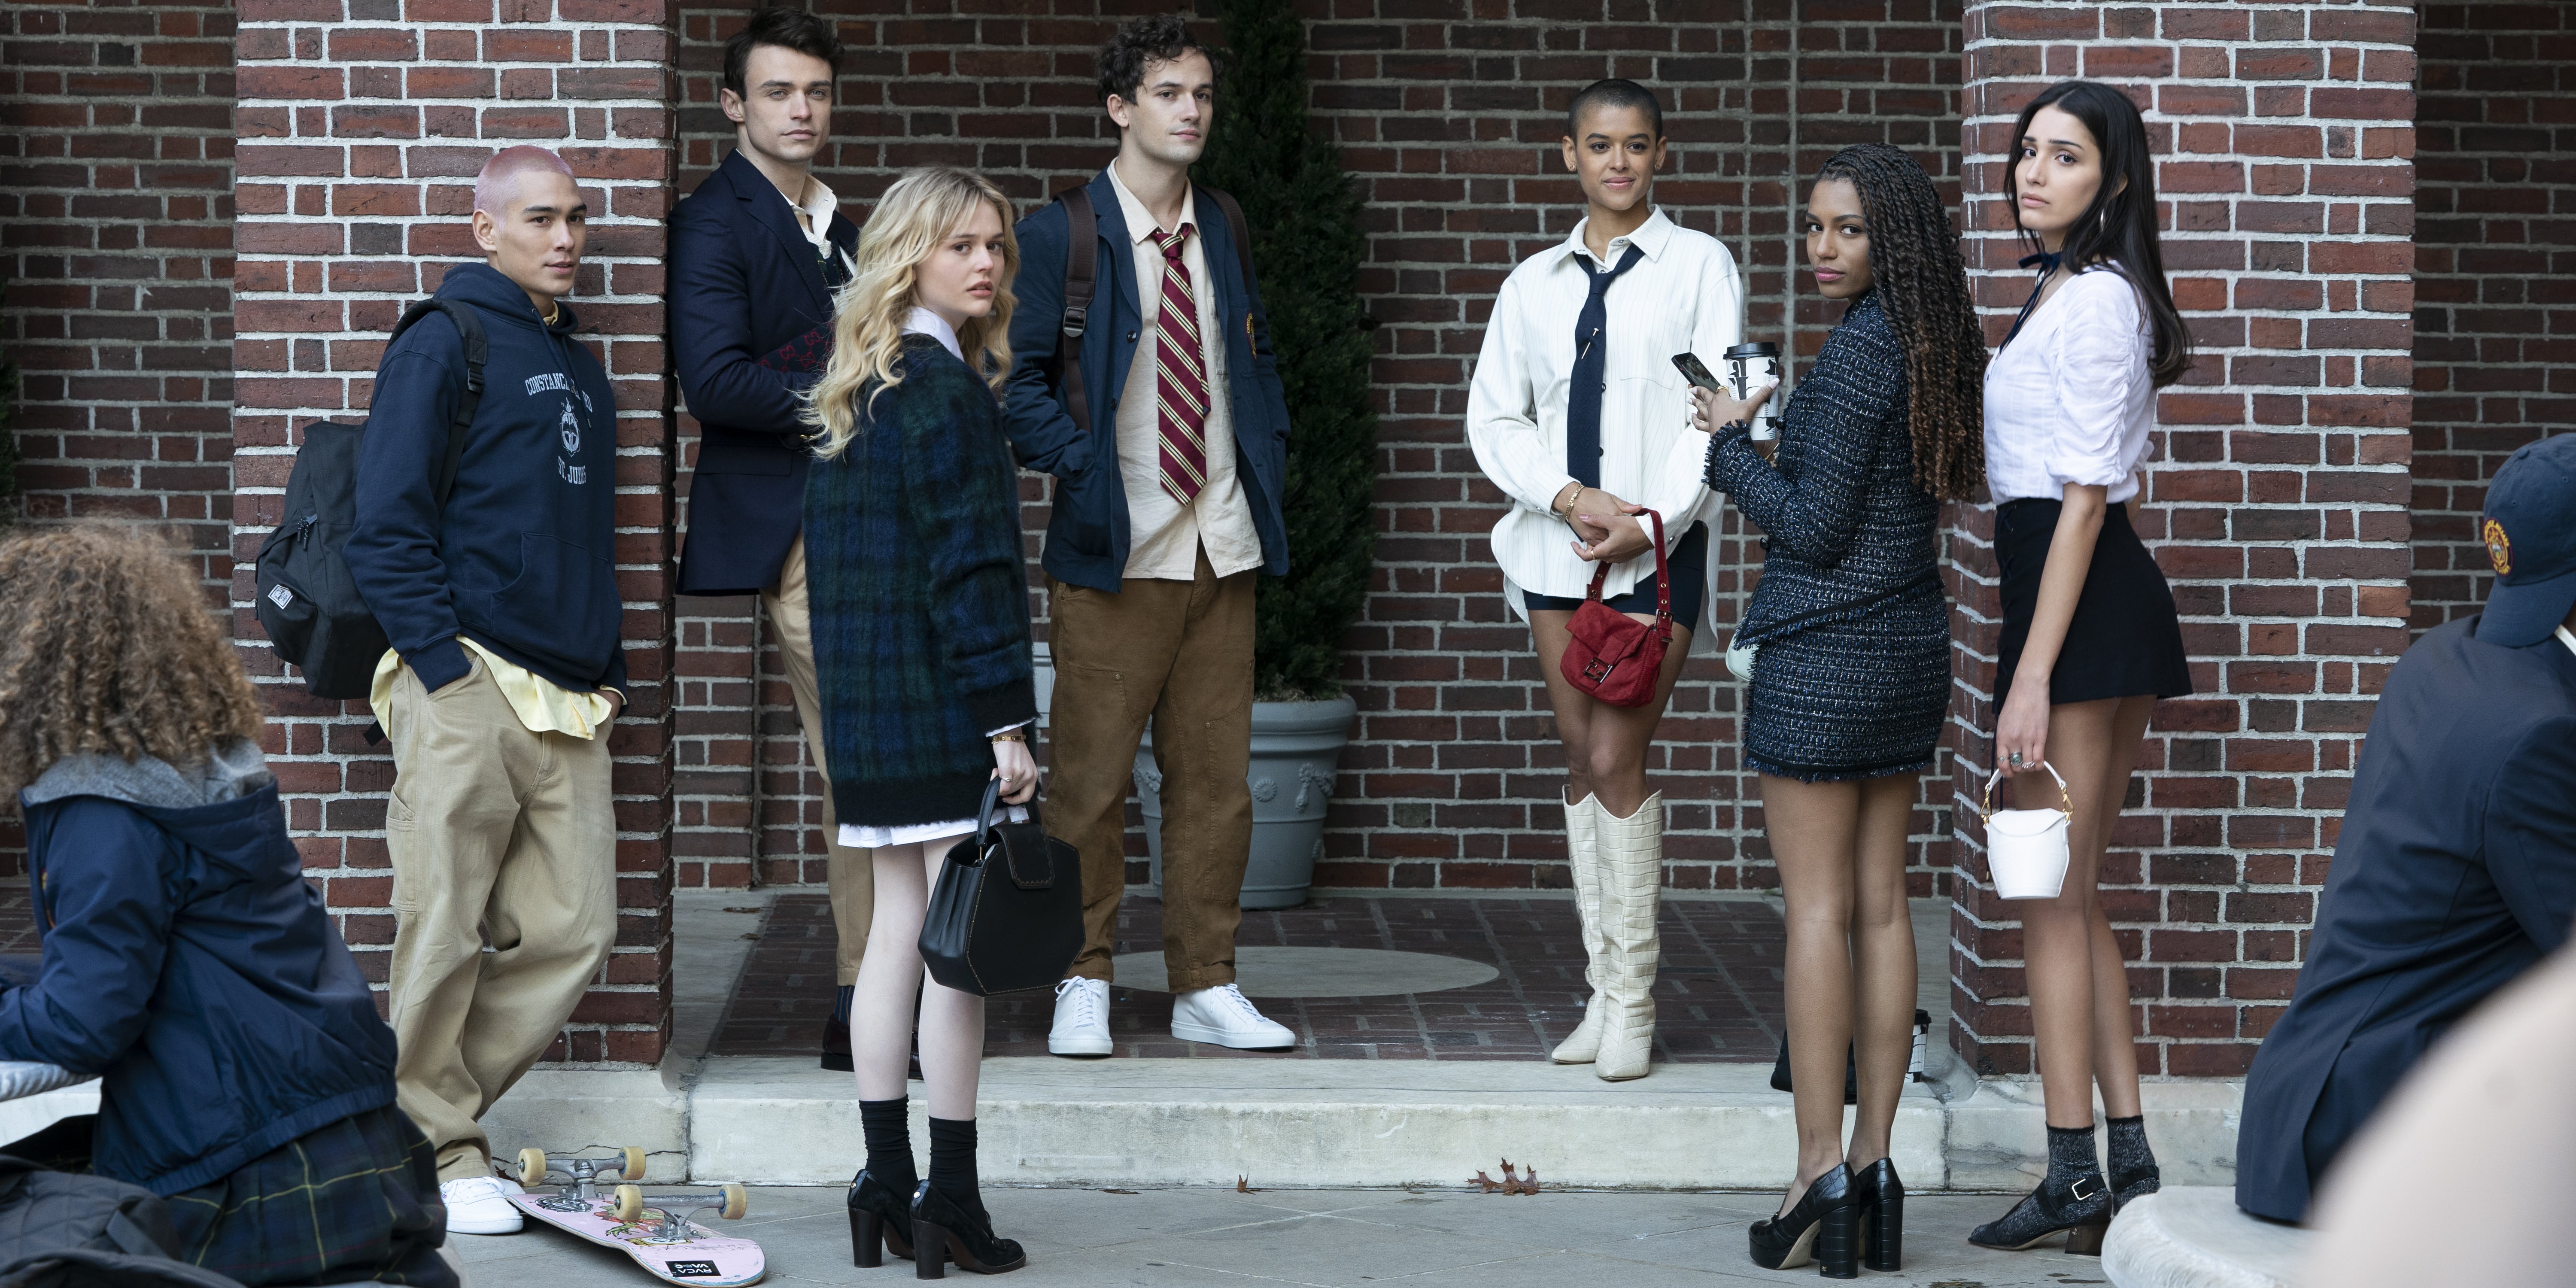 Gossip Girl Reboot: Meet The New Cast & Characters - Hype MY